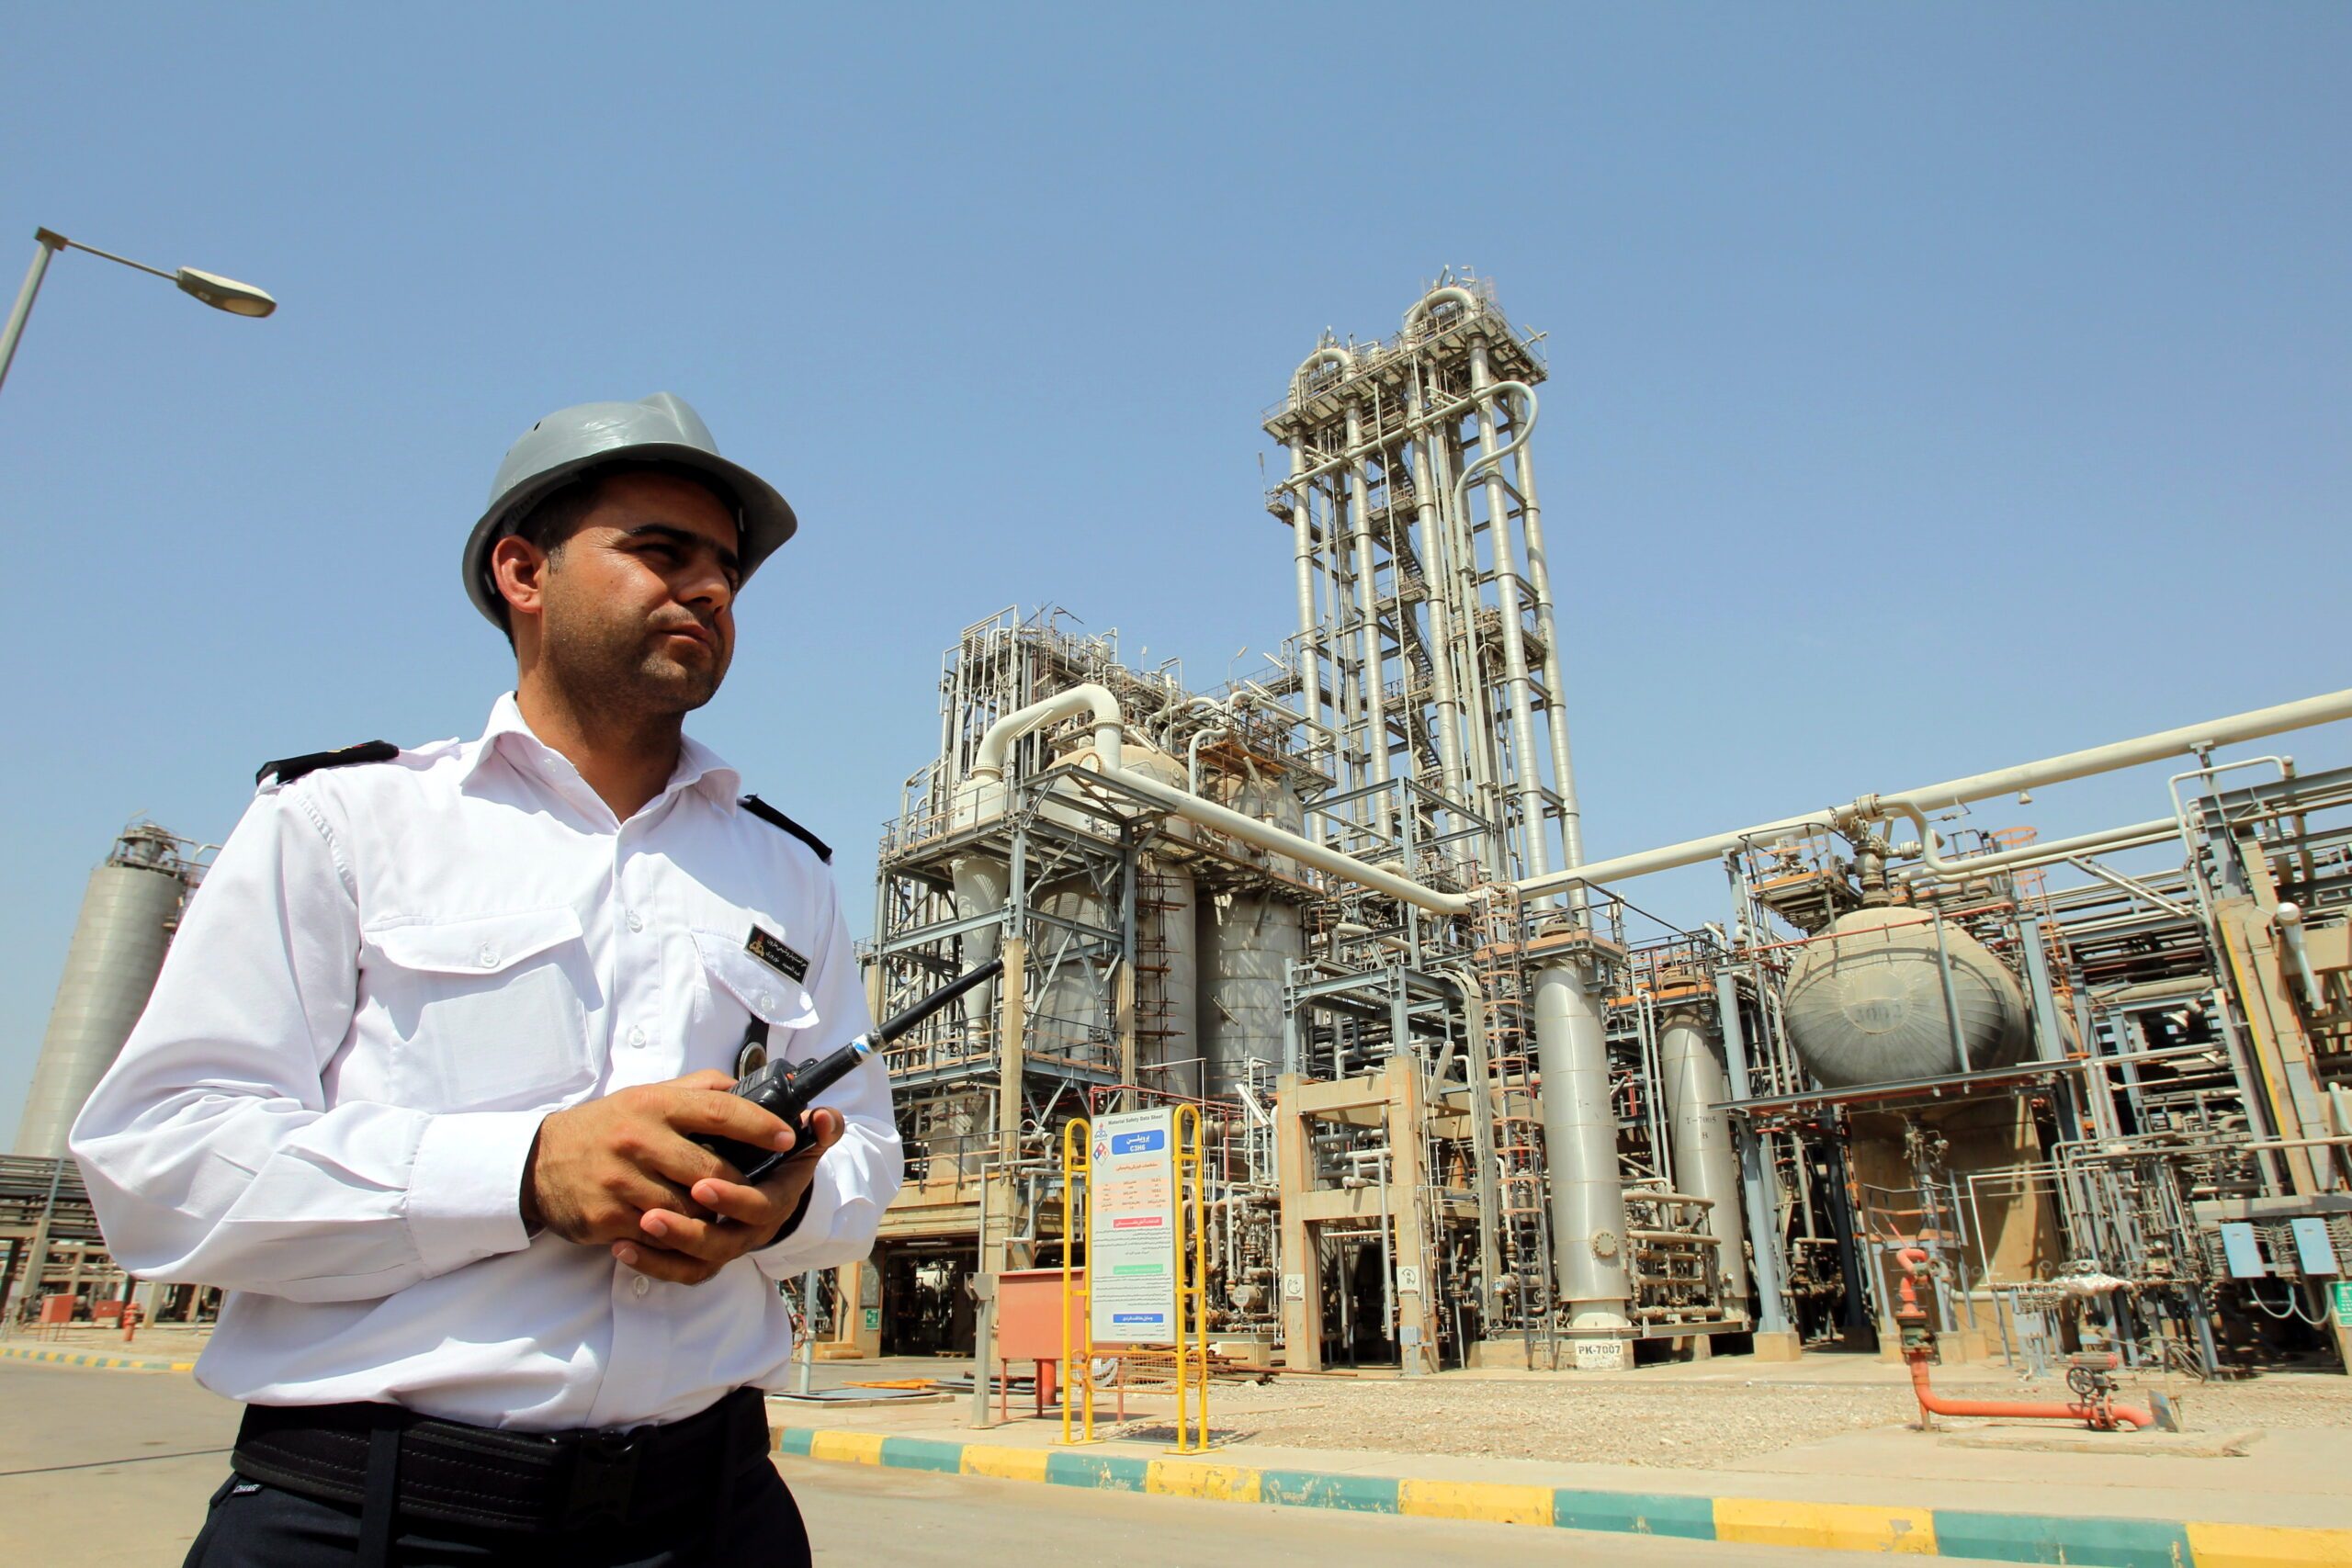 Iran oil exports surpass 2 million barrels per day – minister